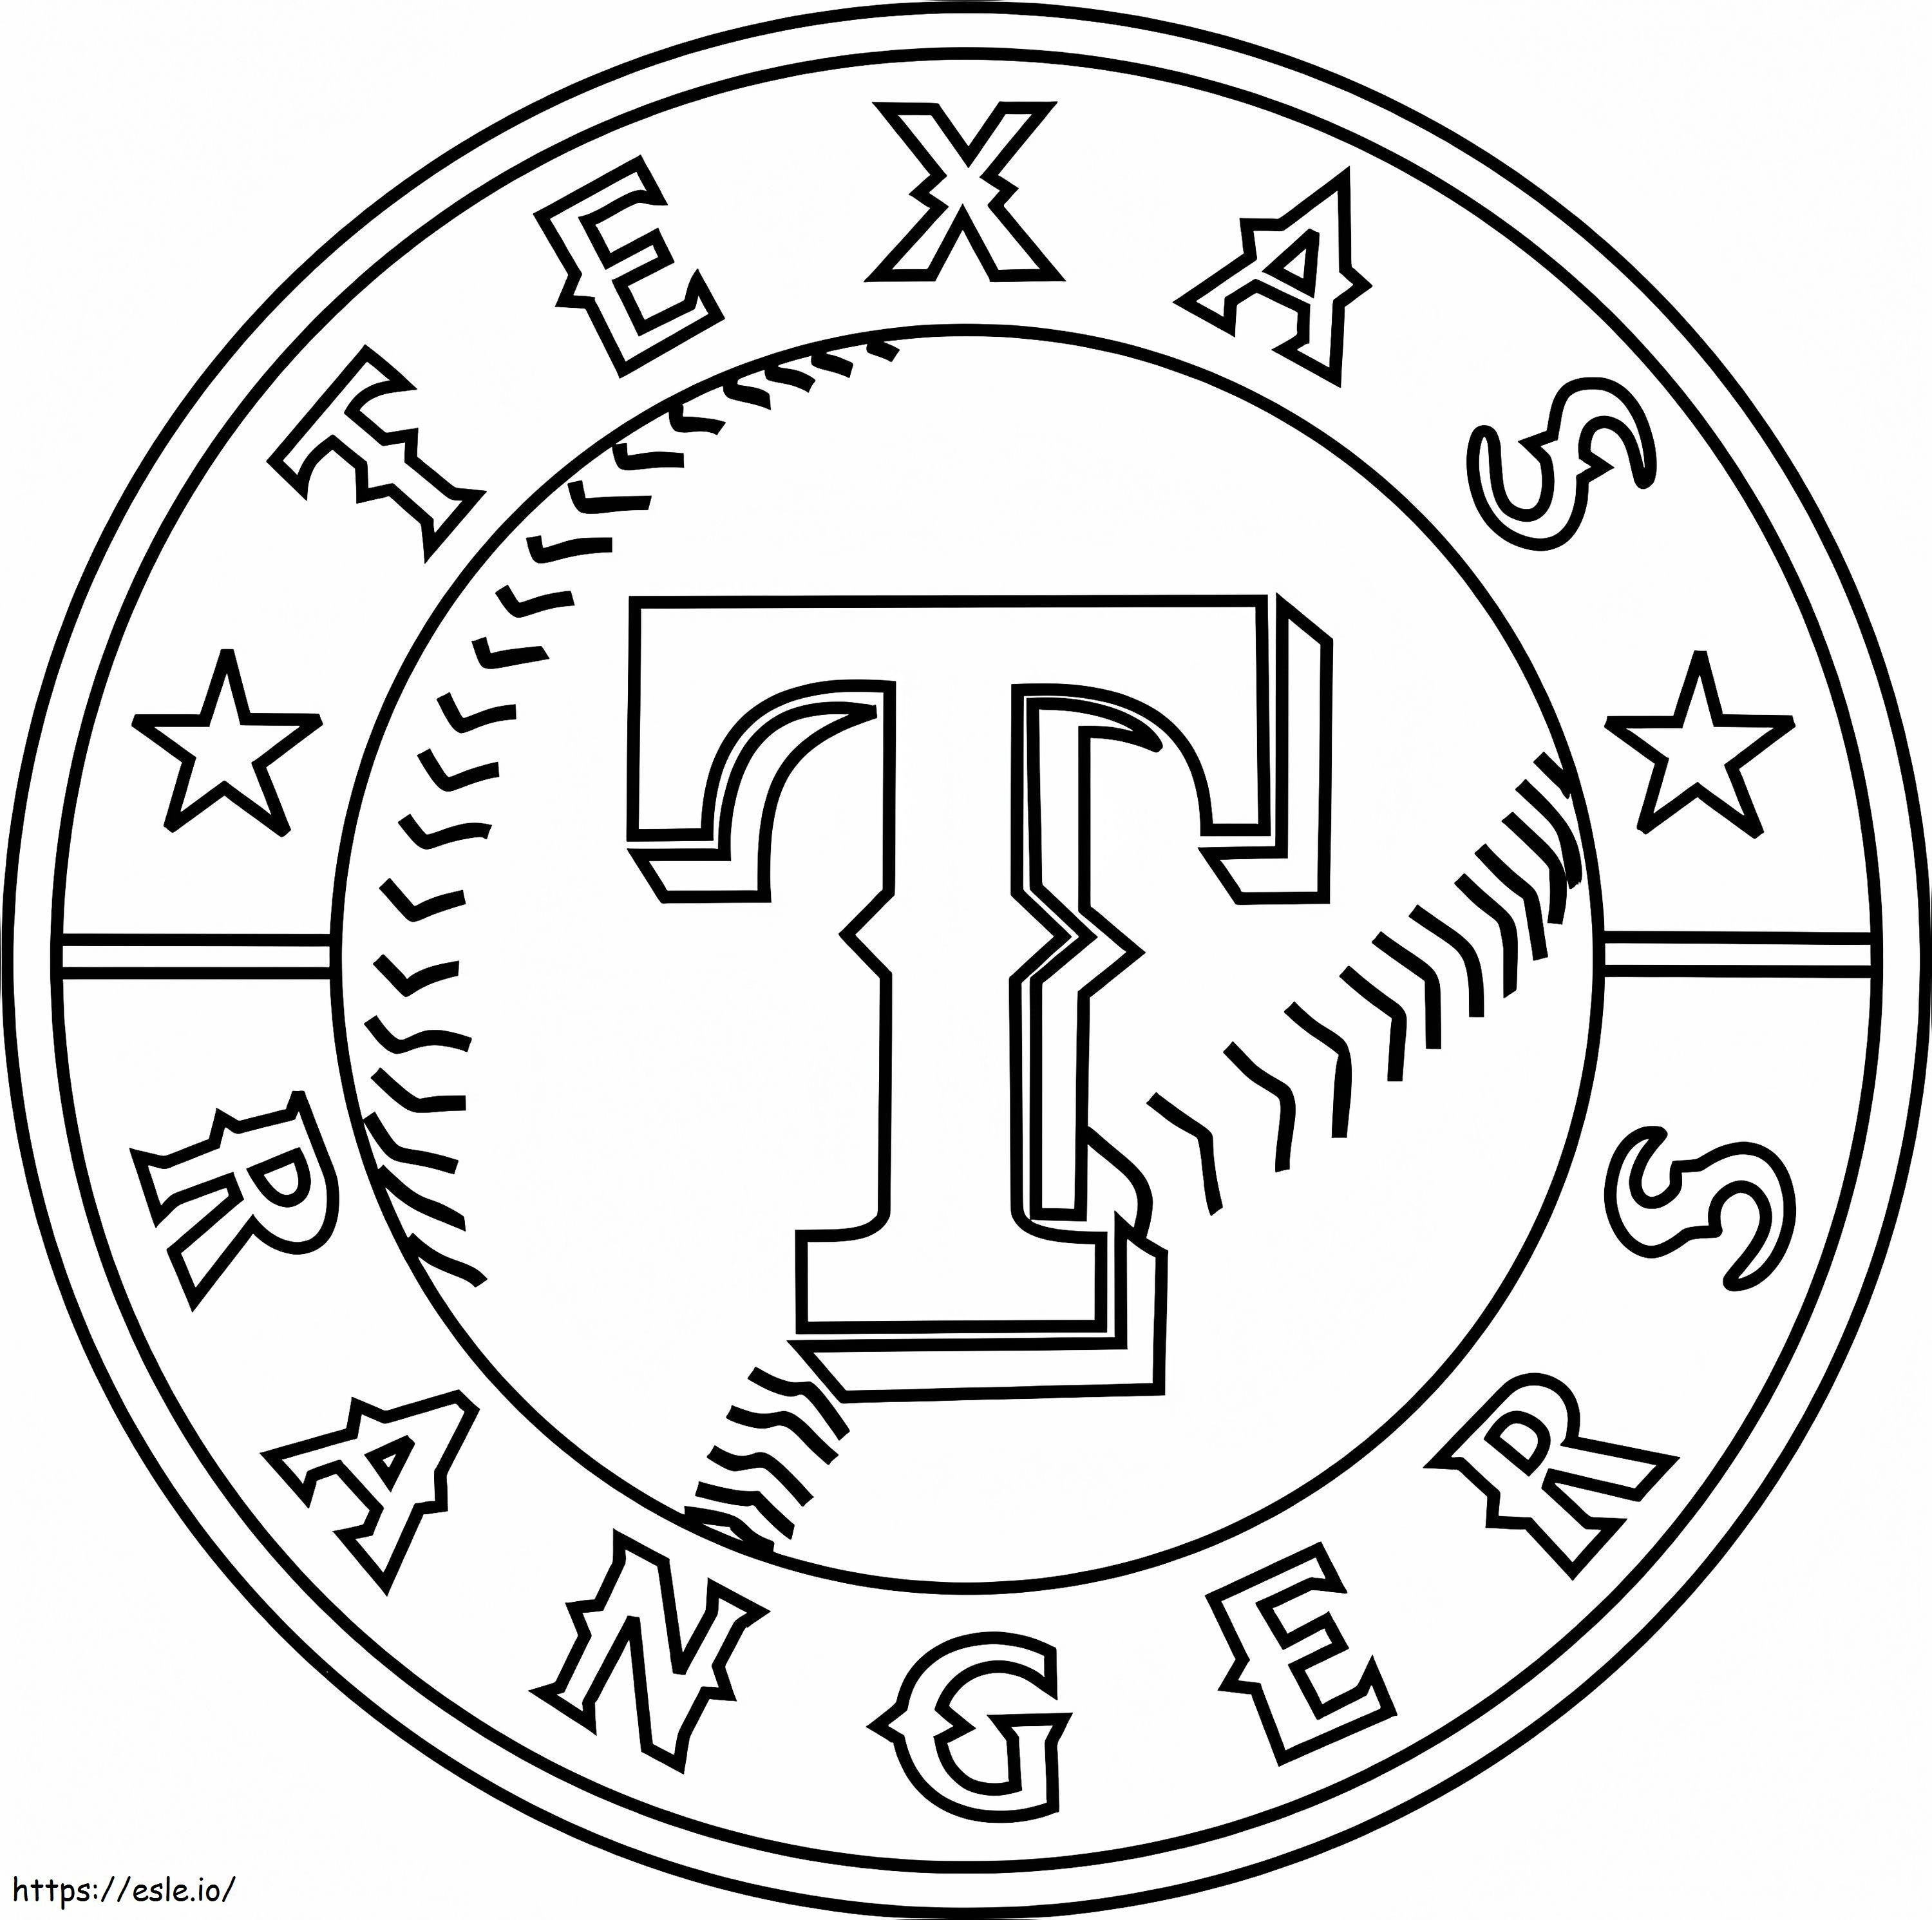 Texas Rangers-Logo ausmalbilder